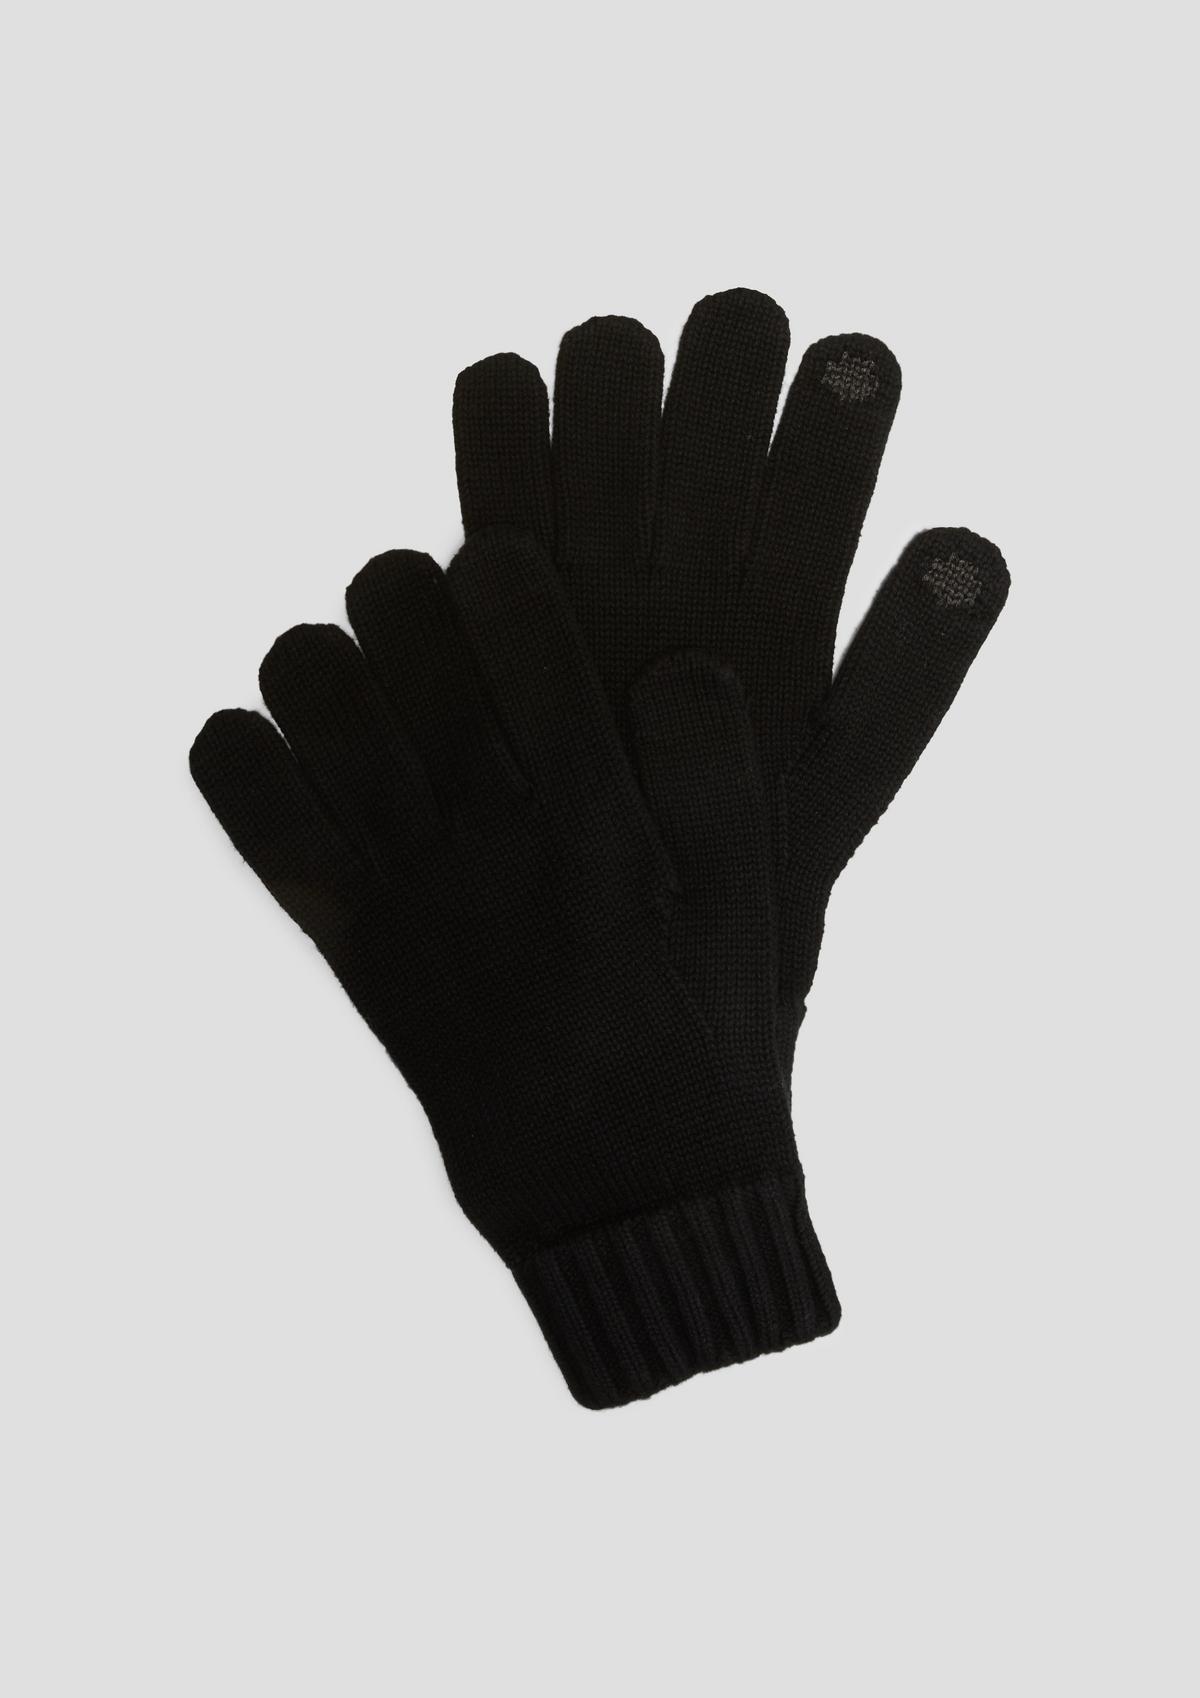 Knit cotton gloves